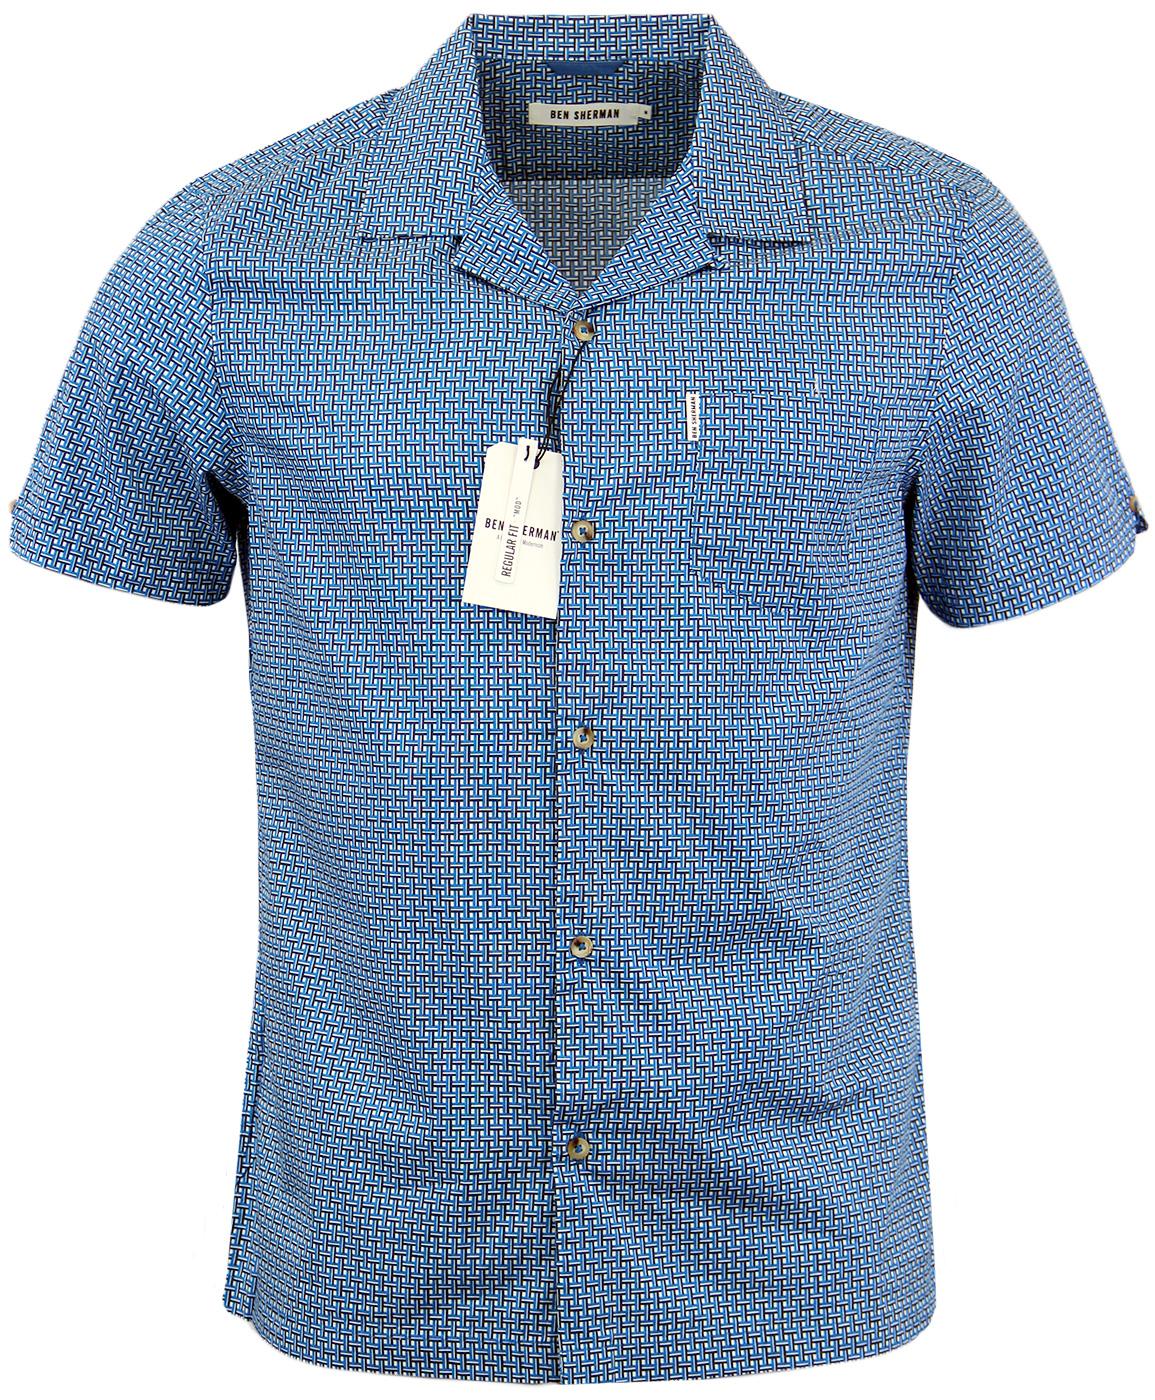 BEN SHERMAN Retro Mod Sixties Basket Weave Shirt in Blue